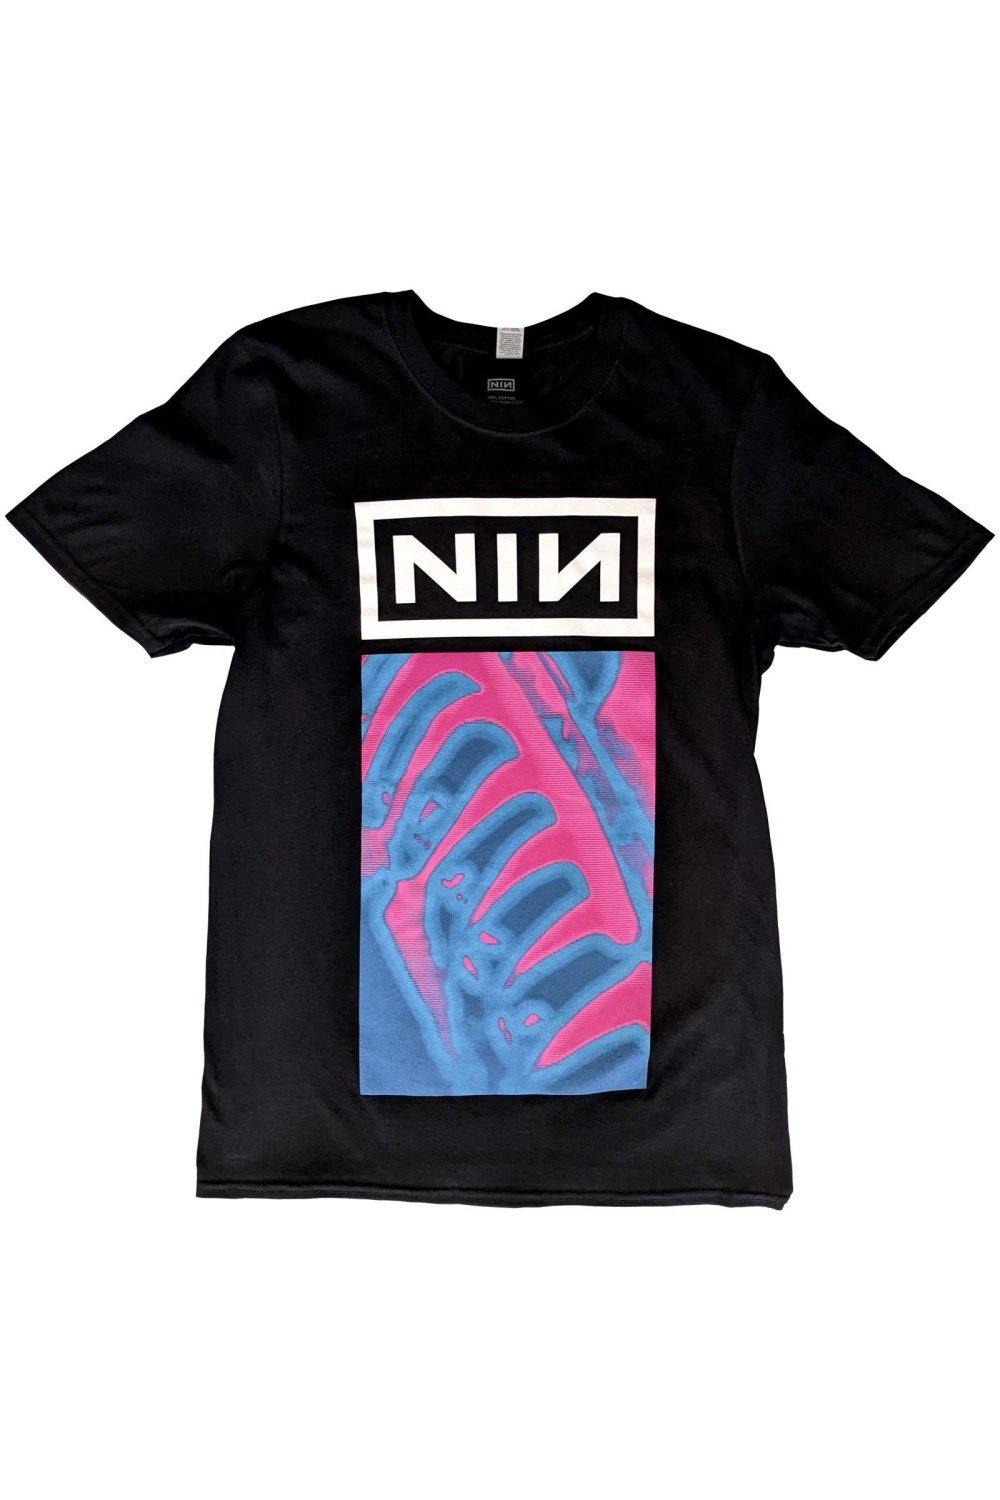 Неоновая хлопковая футболка Pretty Hate Machine Nine Inch Nails, черный футболка pretty hate machine nine inch nails белый